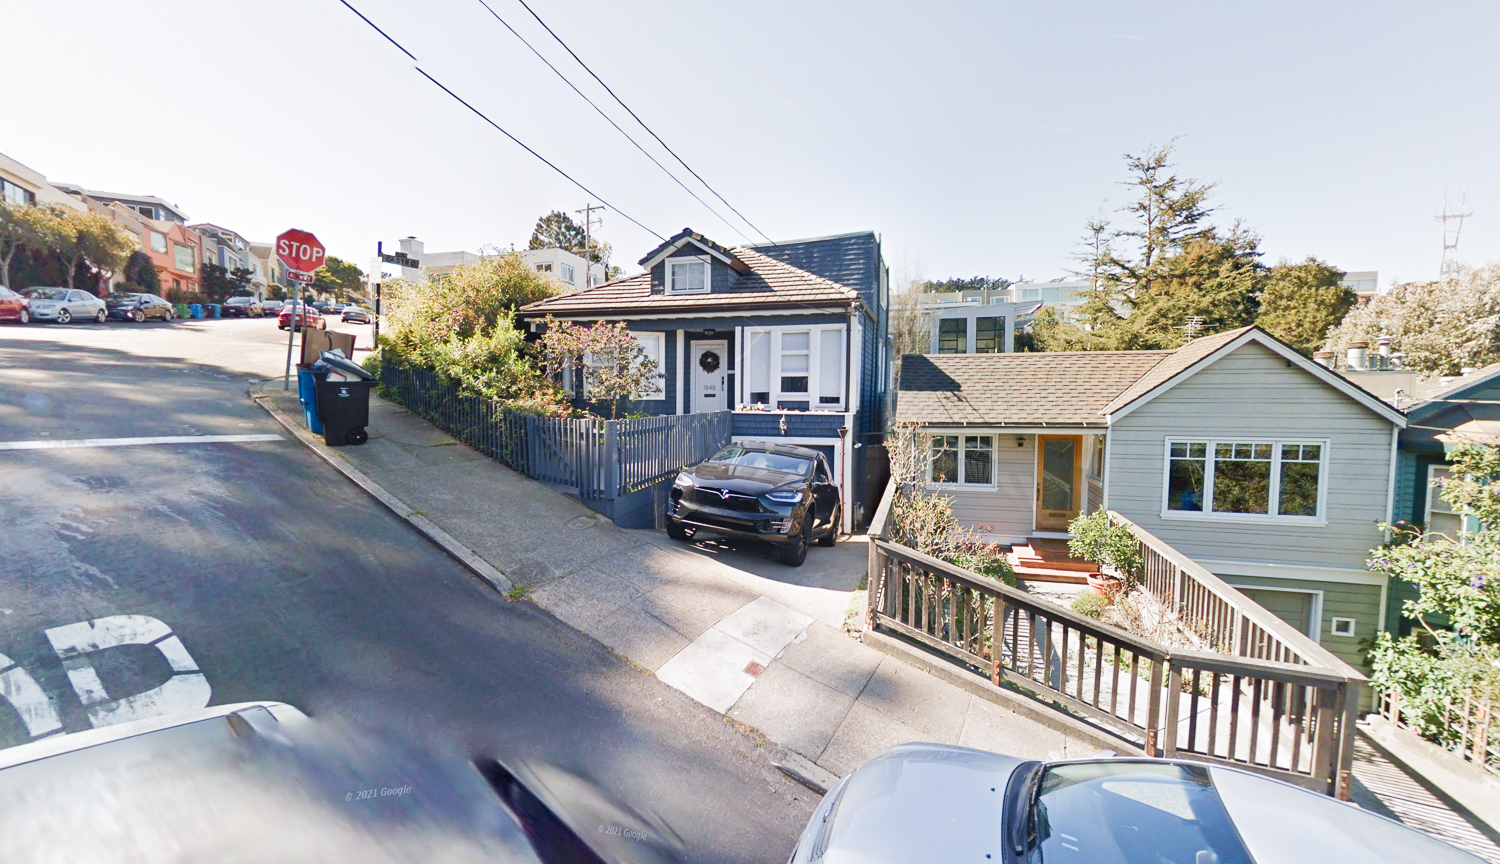 1848 Castro Street, image via Google Street View